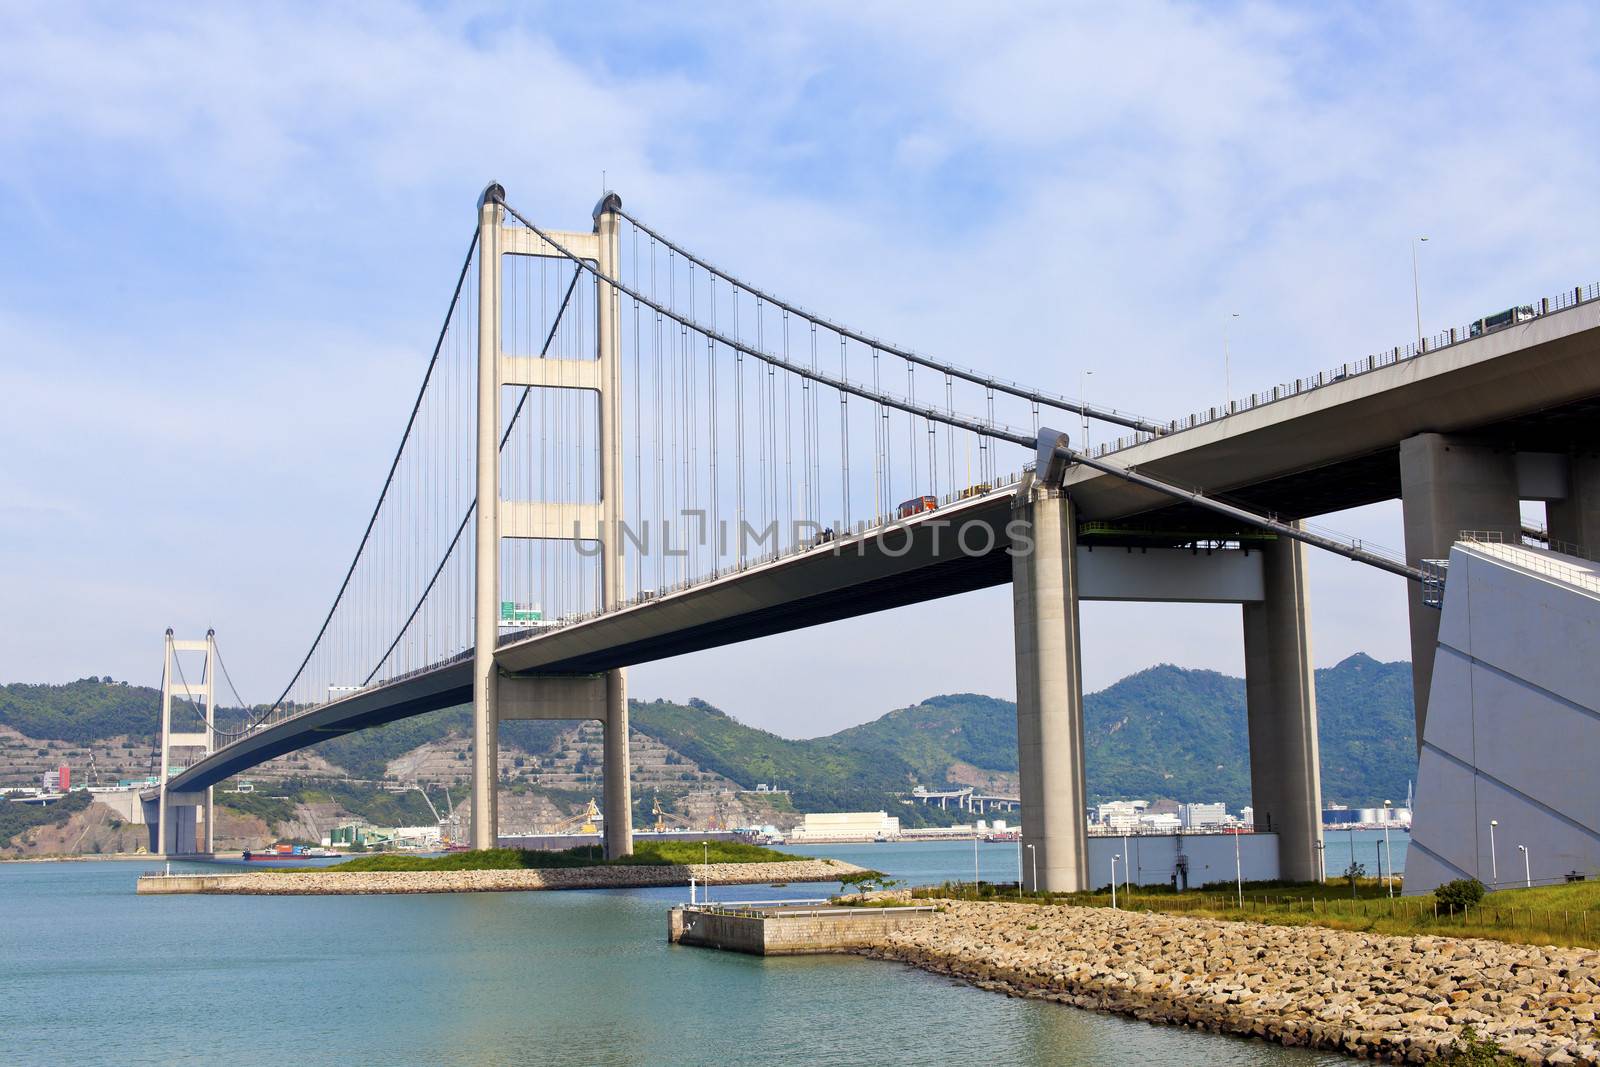 Bridge for transportation by kawing921